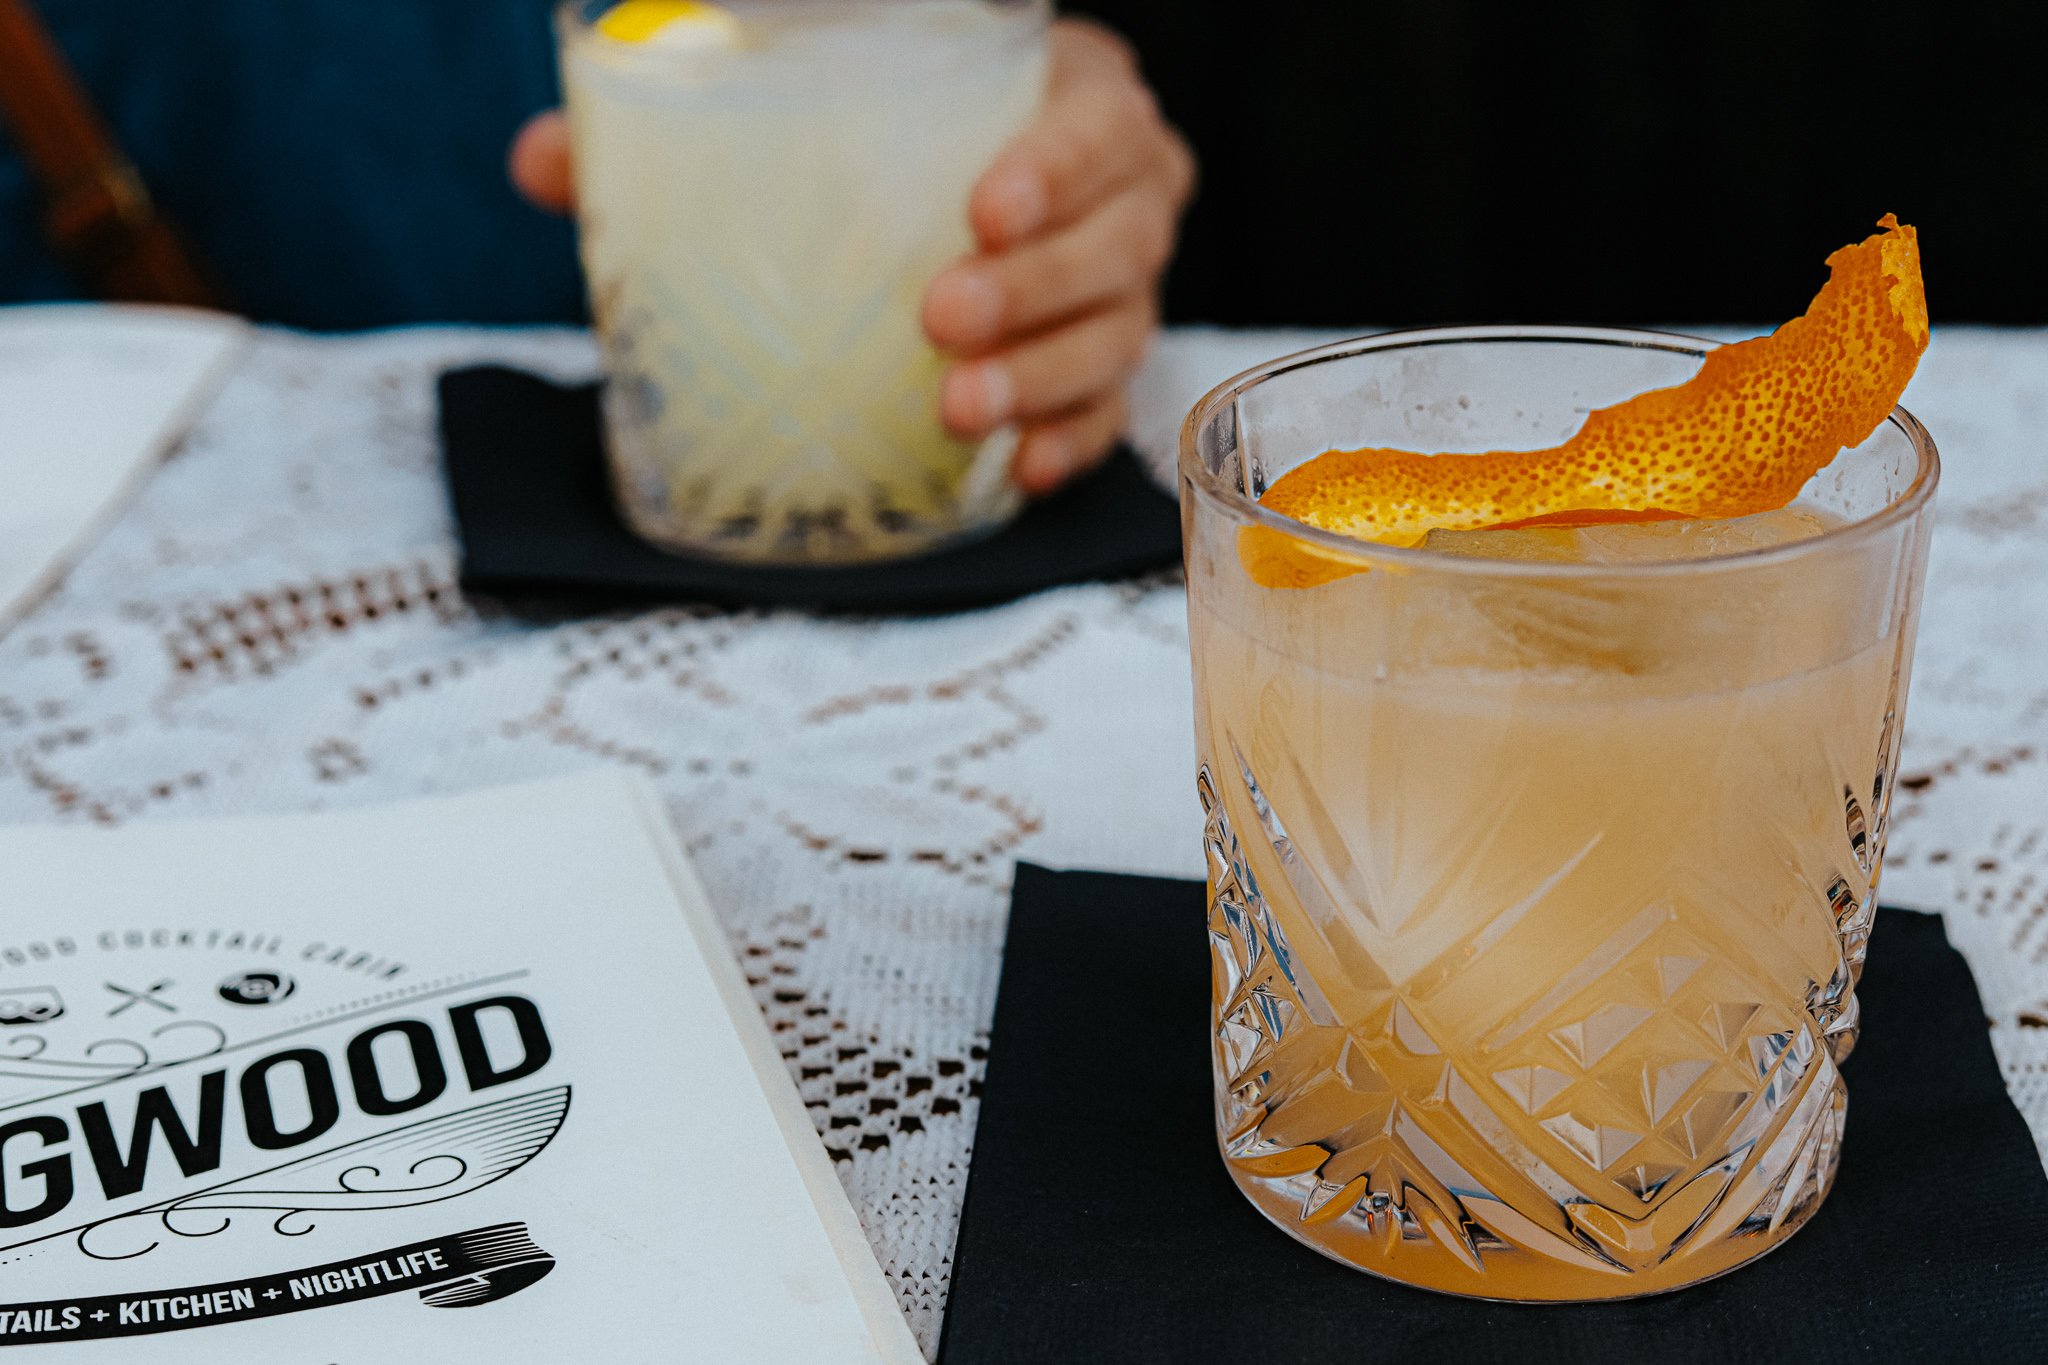 Fancy cocktail glass holds an orange cocktail garnished with an orange peel at Dogwood cocktail bar in bend oregon